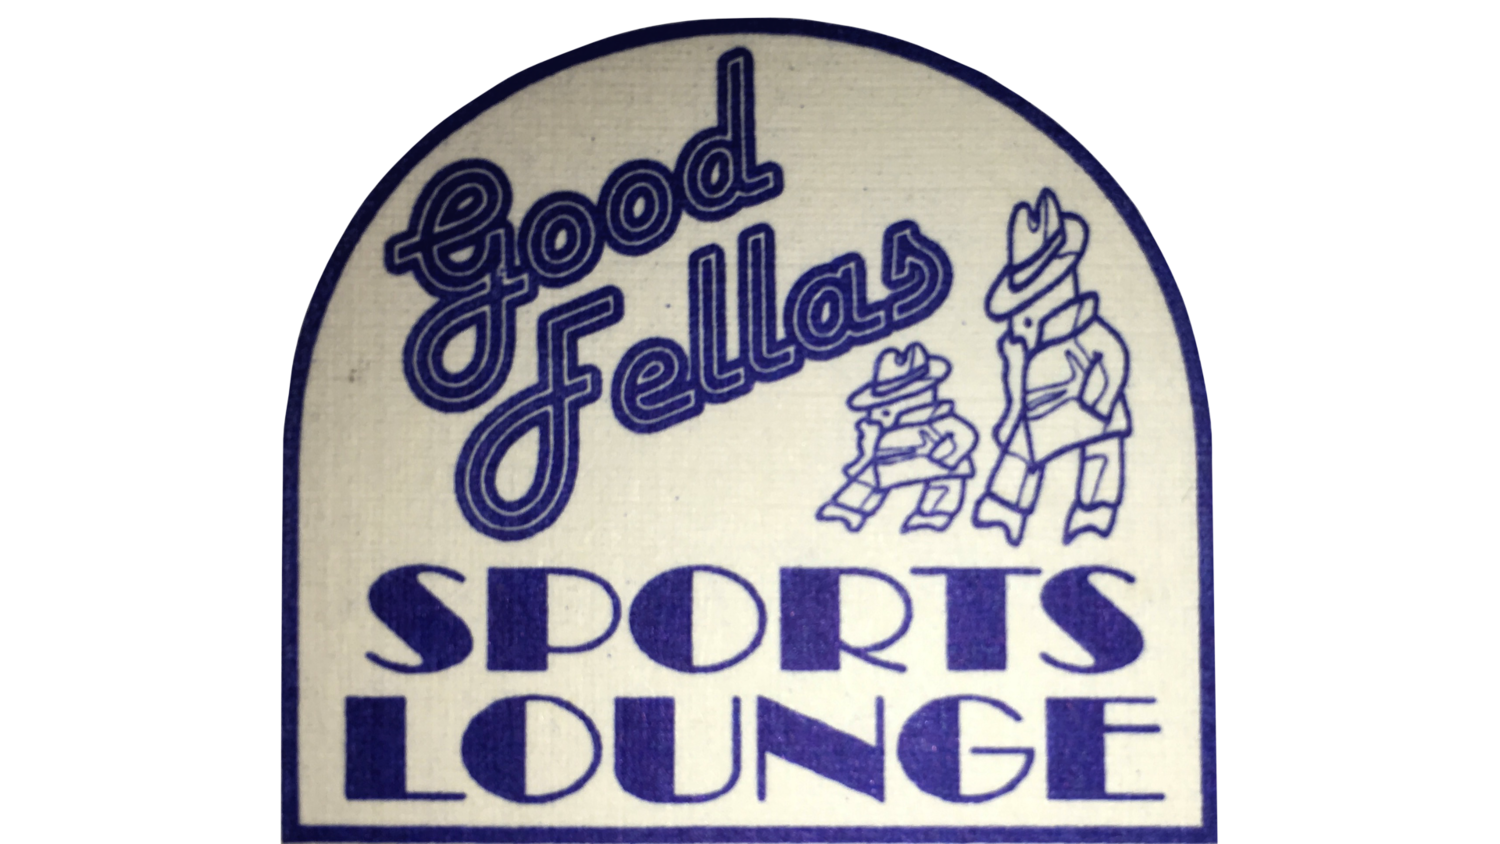 Good Fellas Sports Lounge